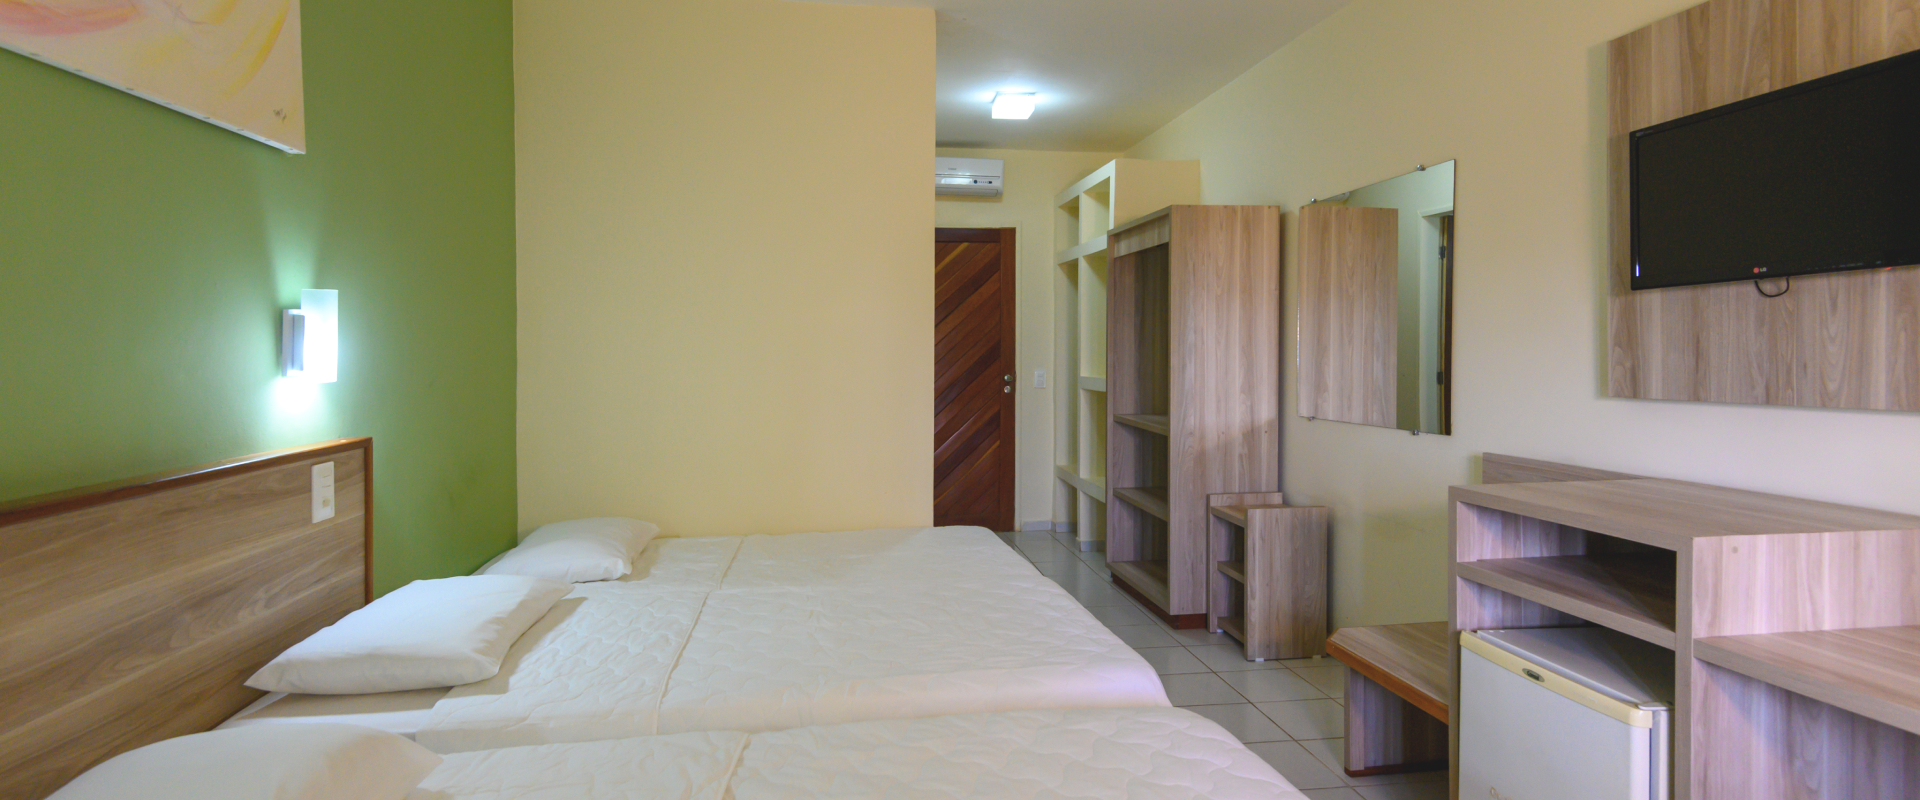 Hotel Village do Sol - Praia de Pirangi, conforto para toda a família